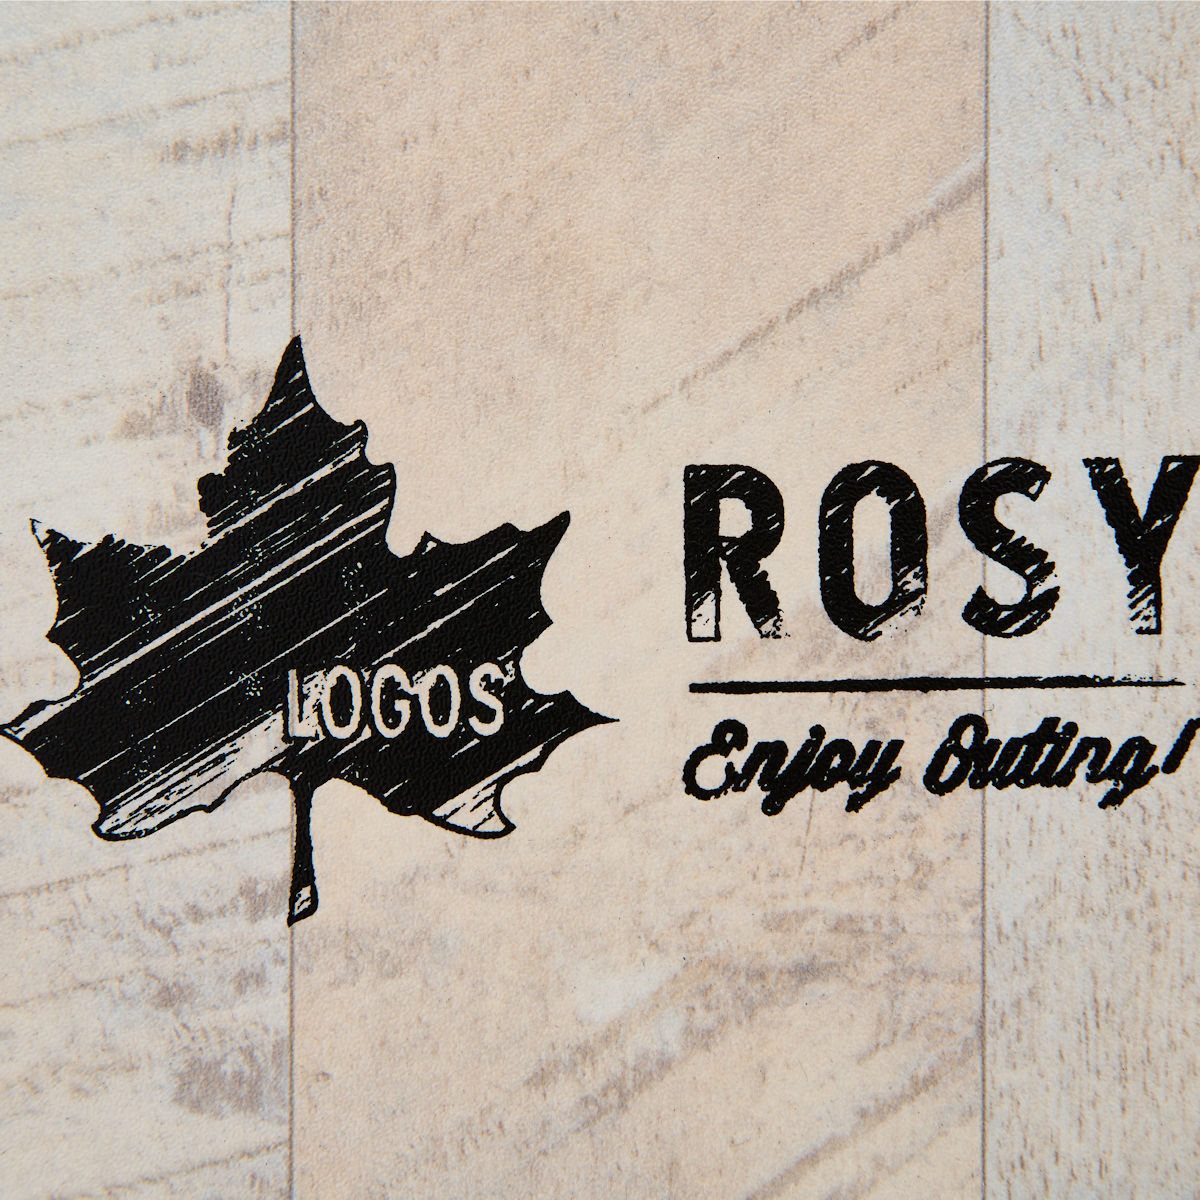 ROSY ファミリーベンチテーブルセット|ギア|家具|セット|製品情報 